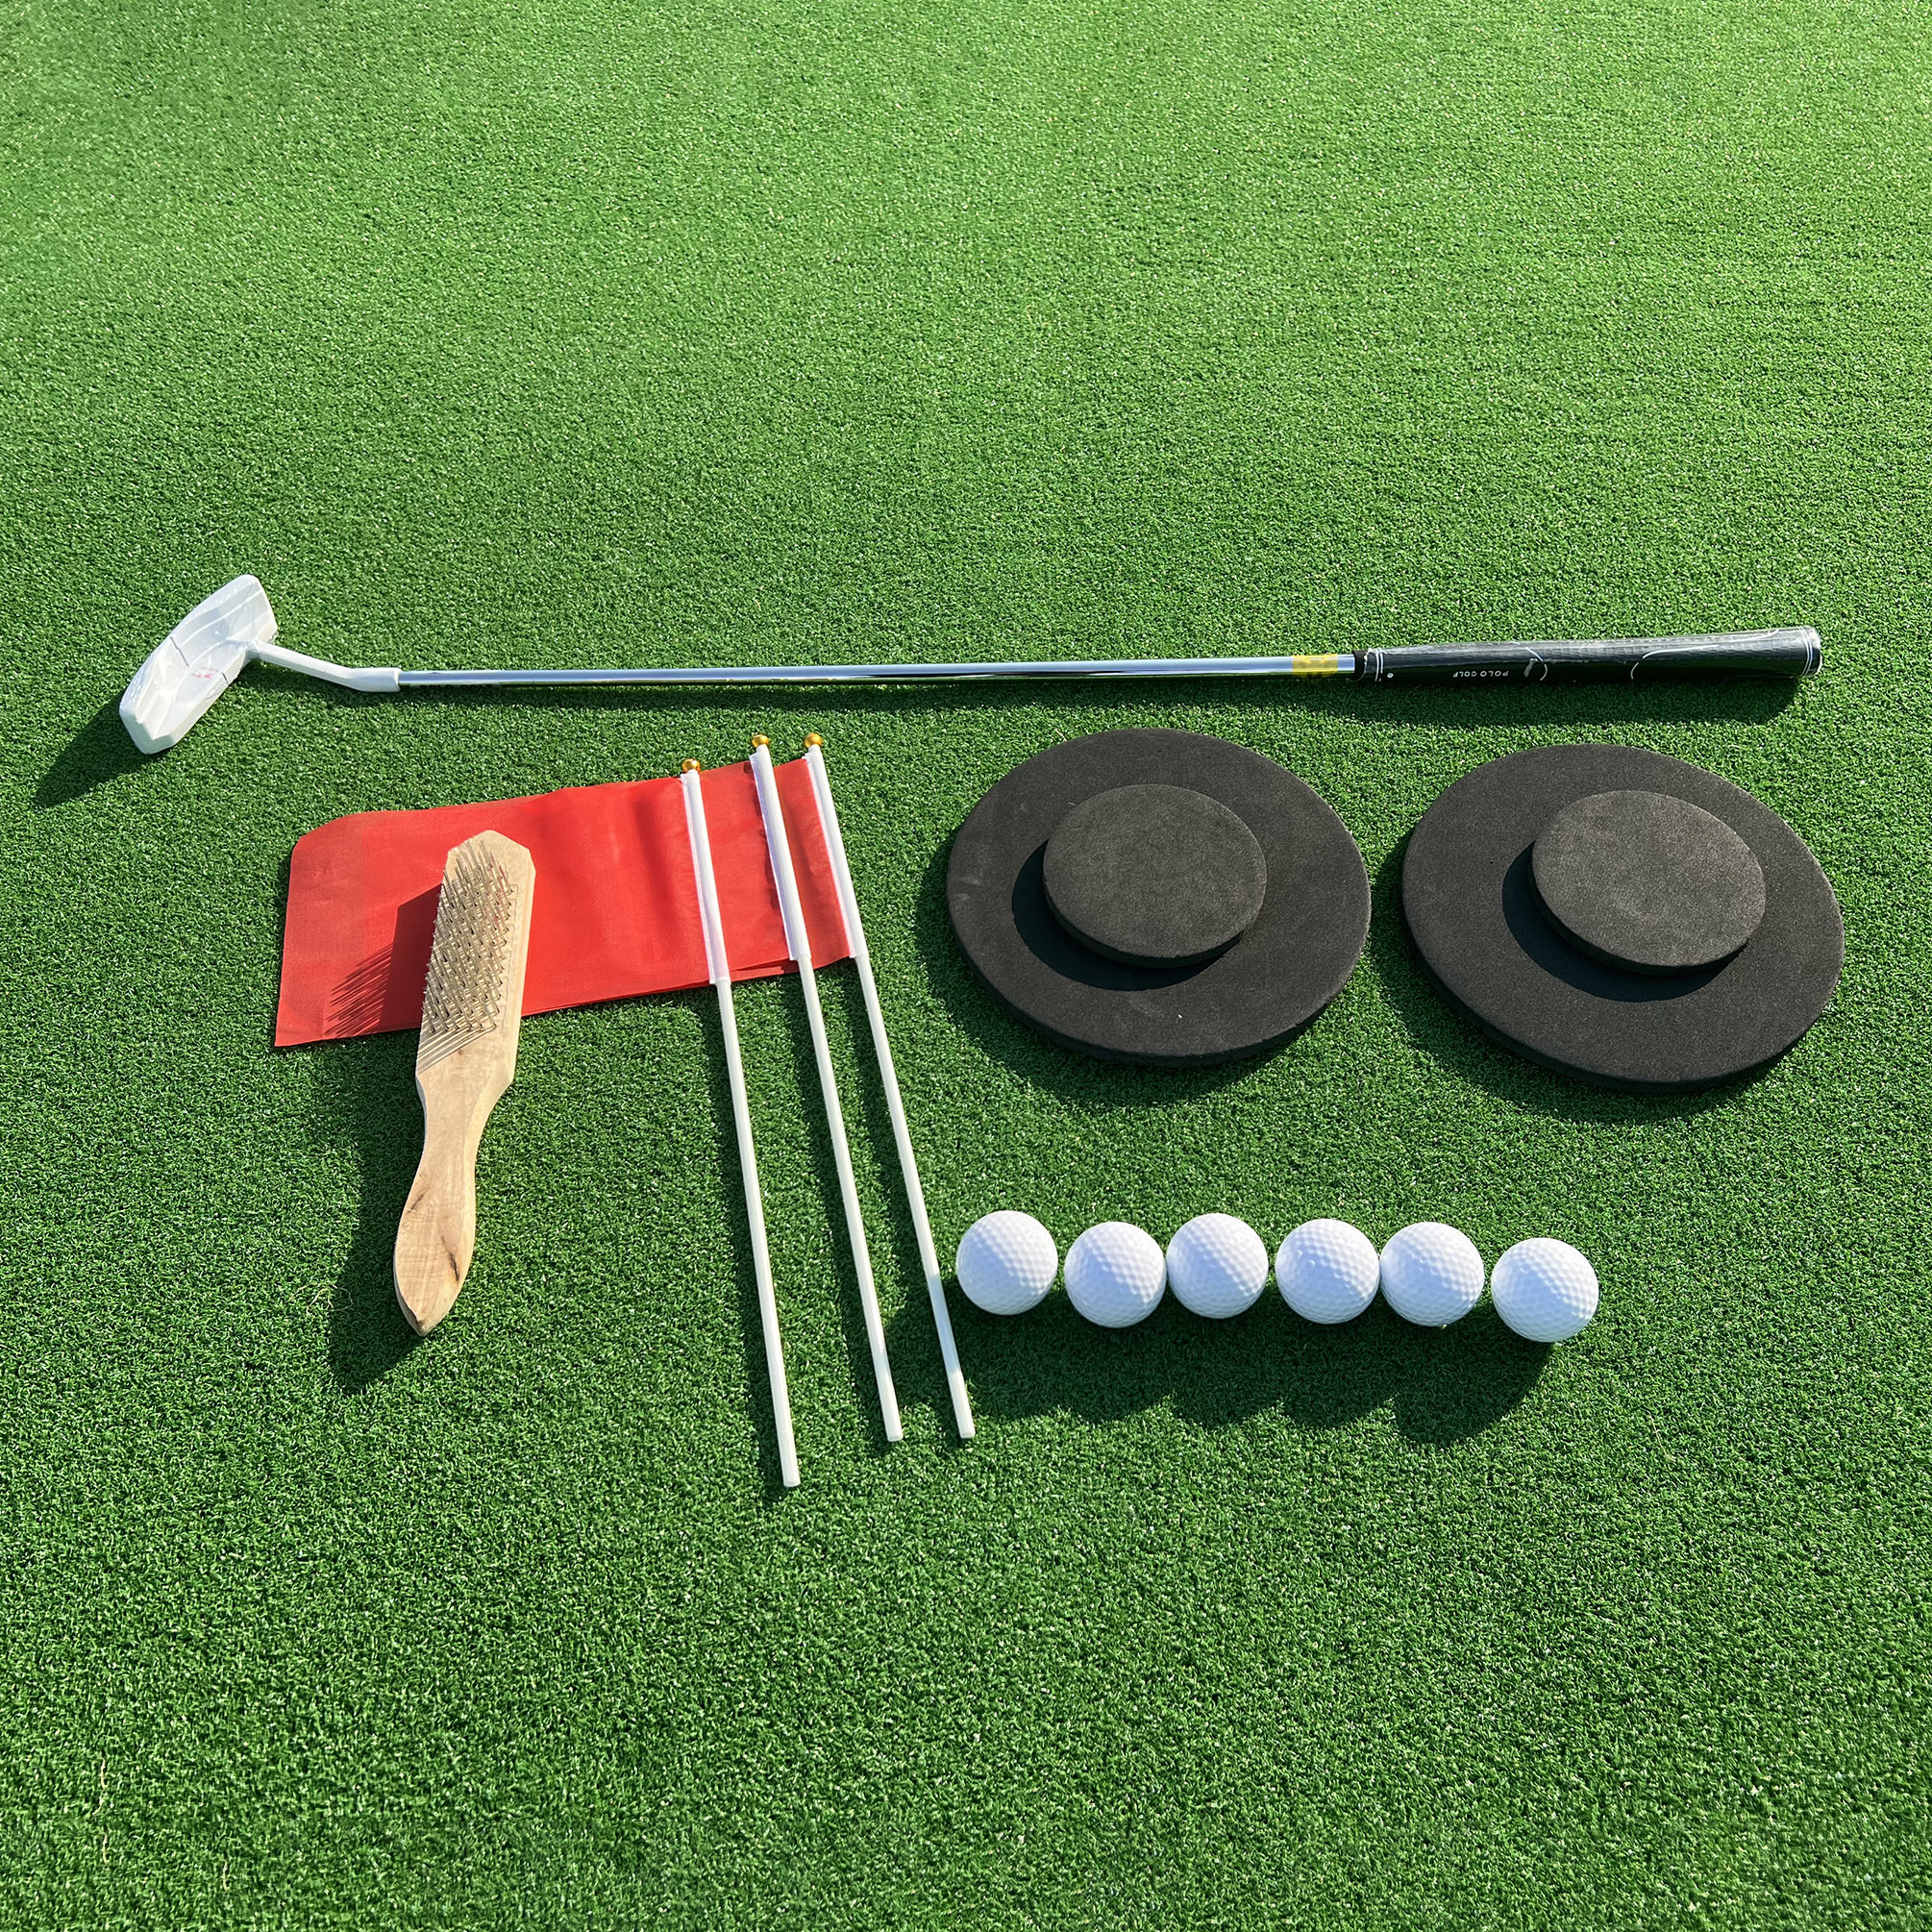 FixtureDisplays 20 X 10 Feet Premium Golf Mat Set, Artificial Turf Golf Practice Mats with 6 Golf Balls and A Professional Golf Clubs